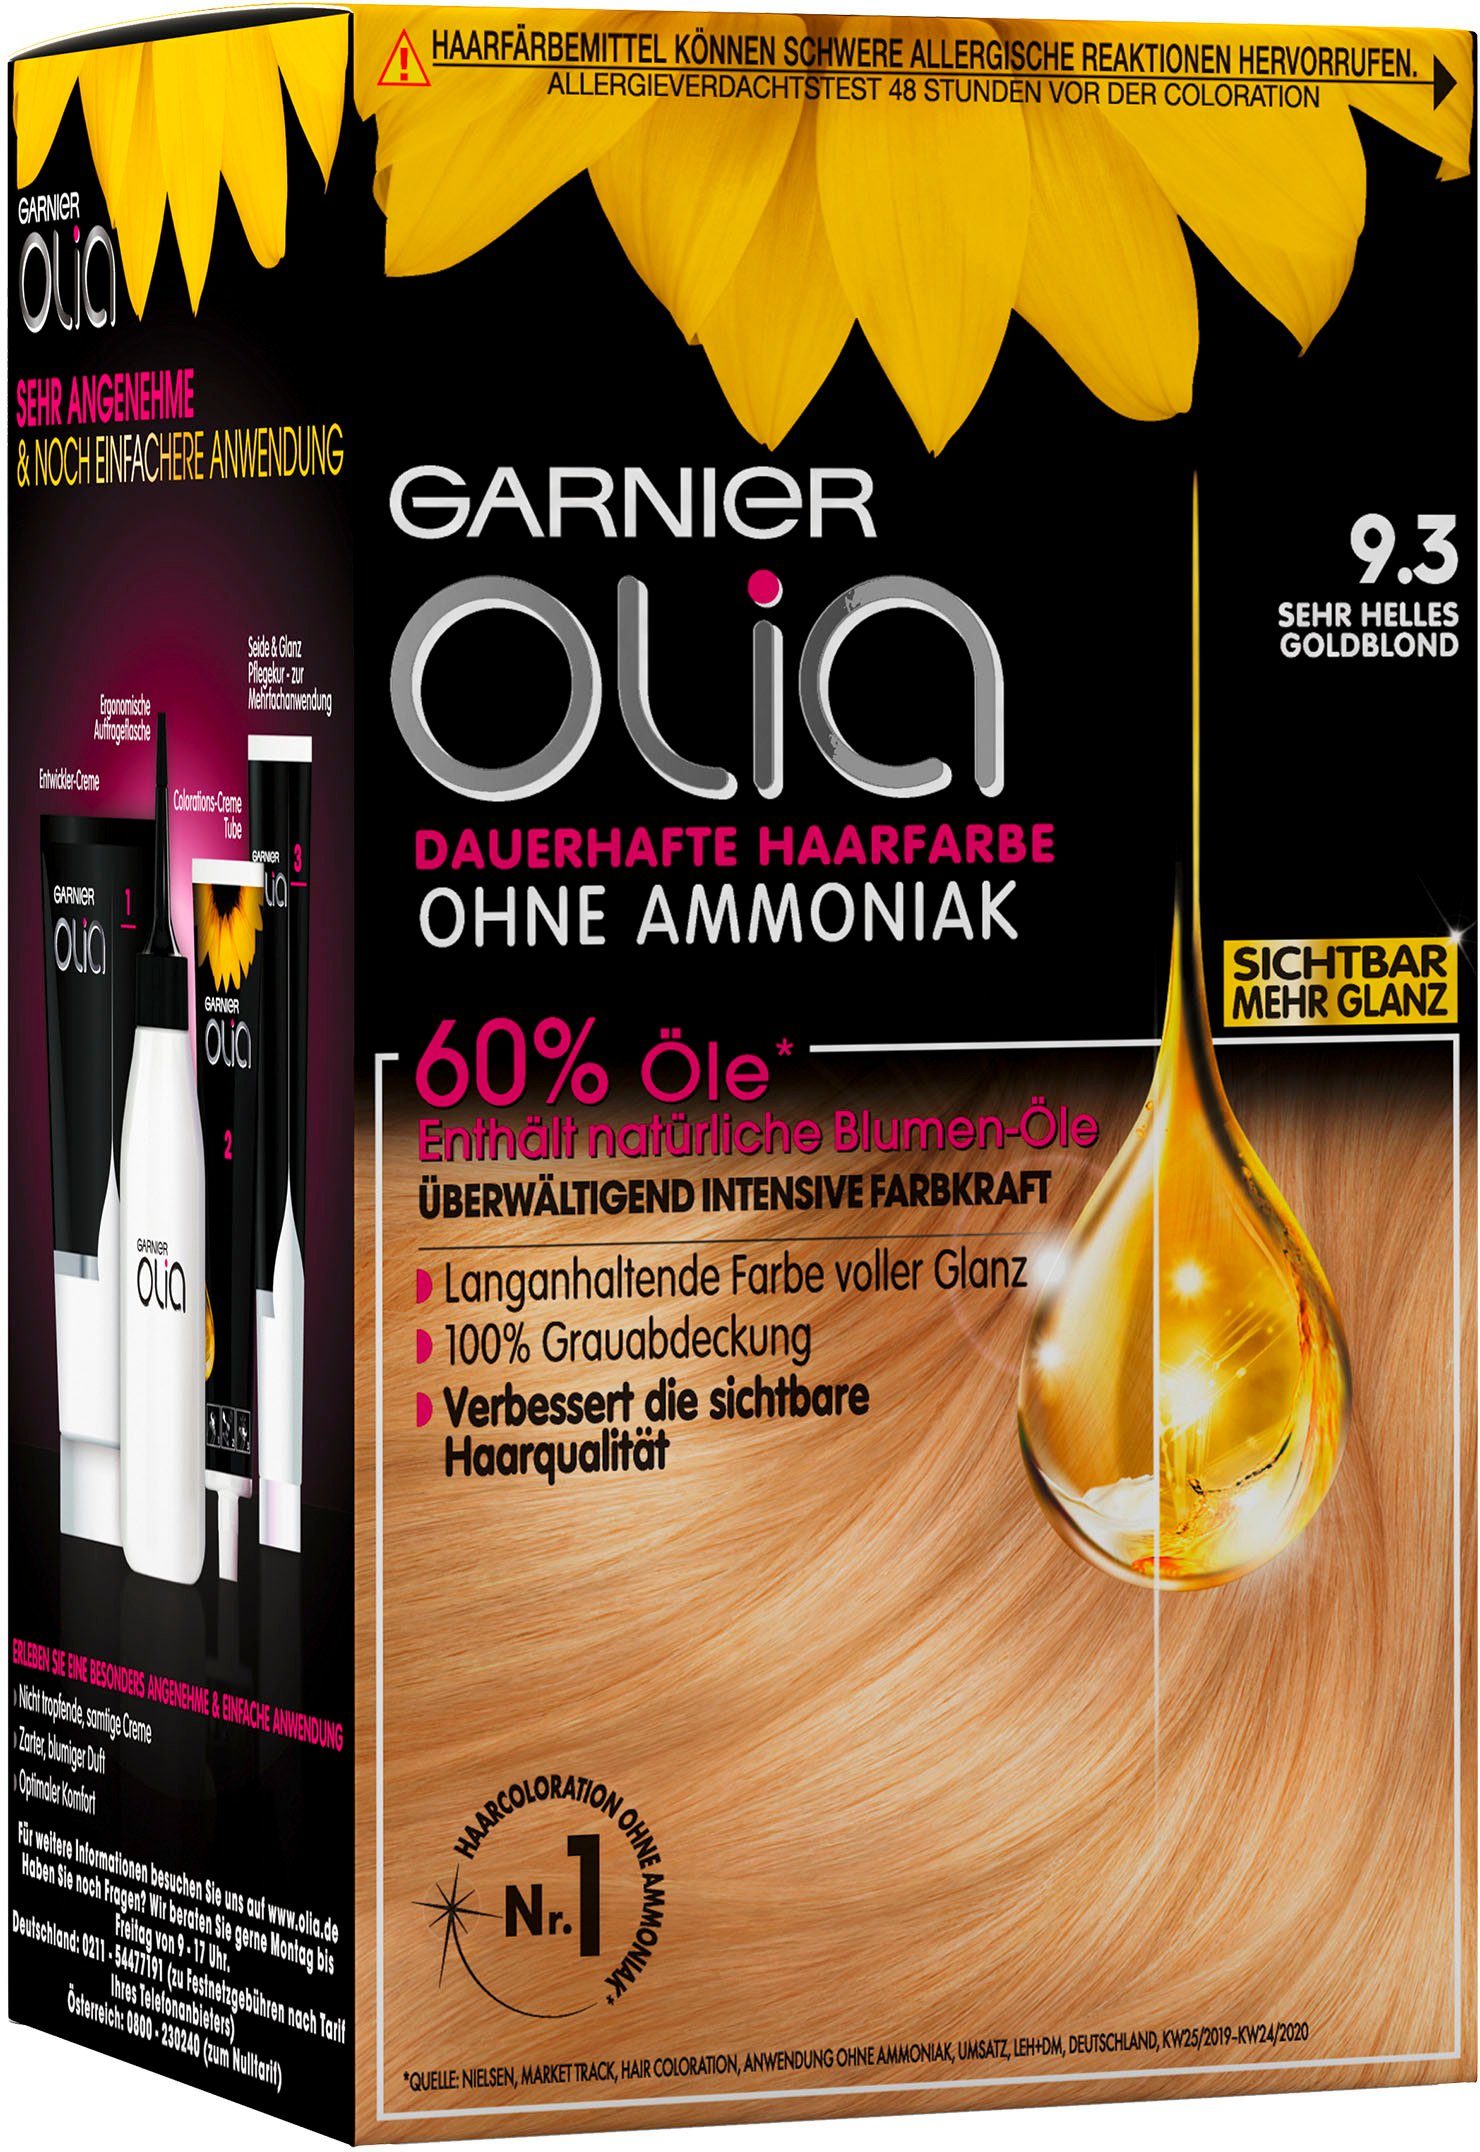 GARNIER 9.3 Olia goldblond Haarfarbe dauerhafte helles Coloration Sehr